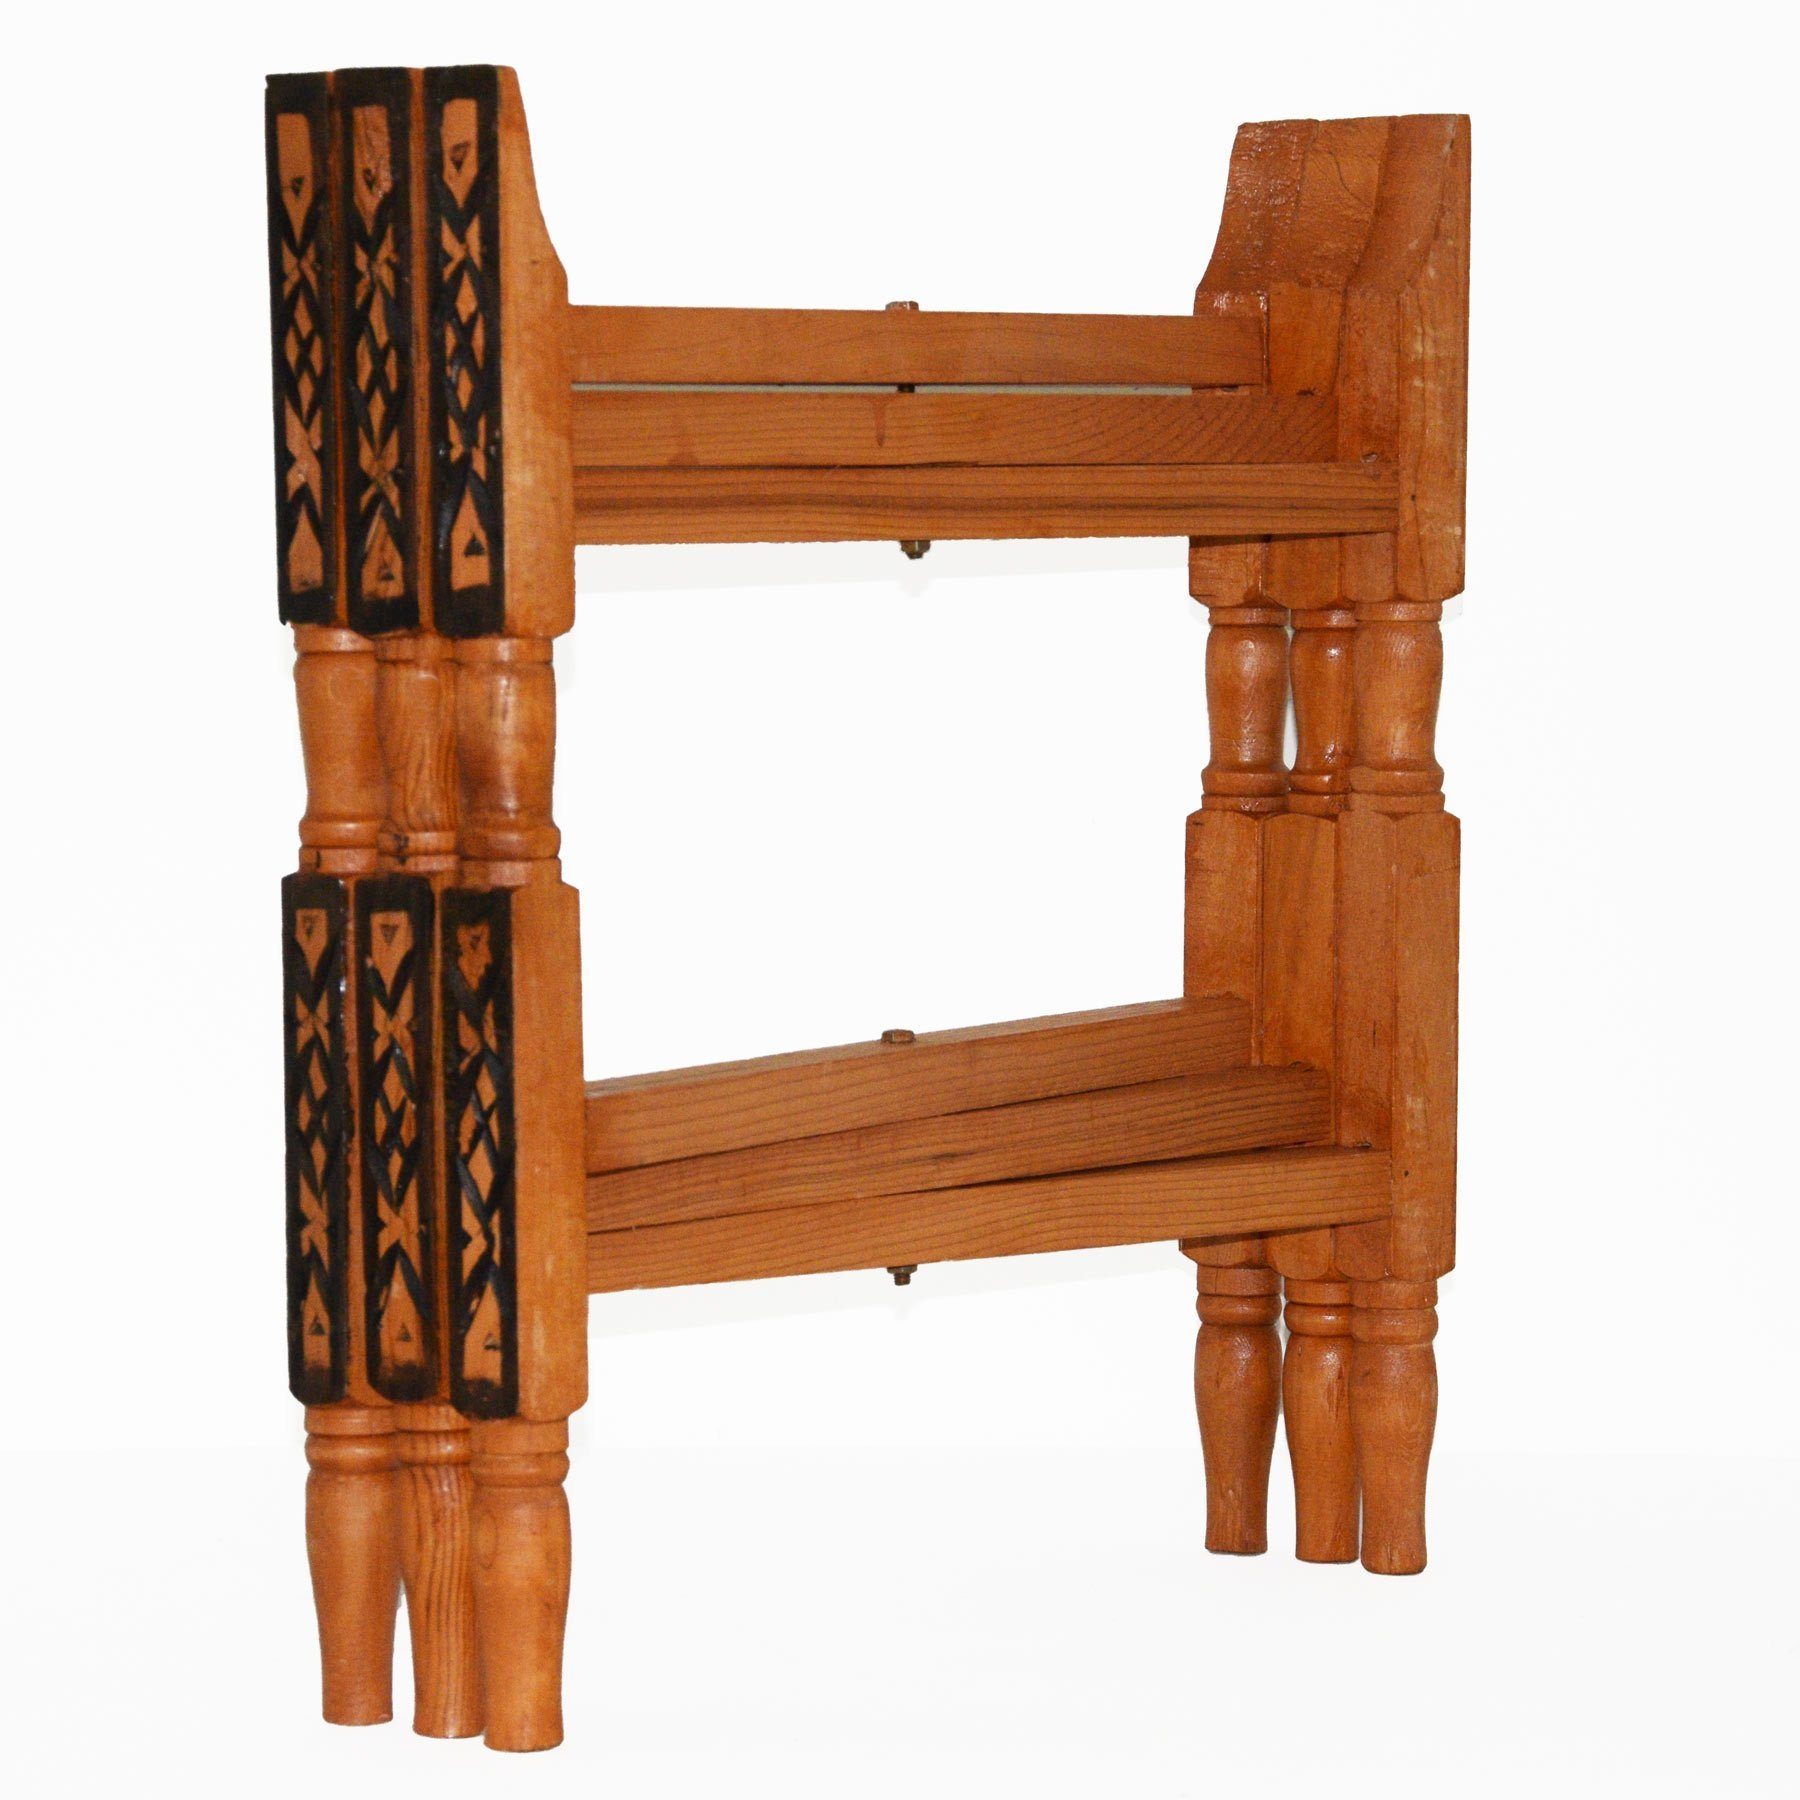 SIMANDRA Beistelltisch Holzgestell für Tablett marrokanisches